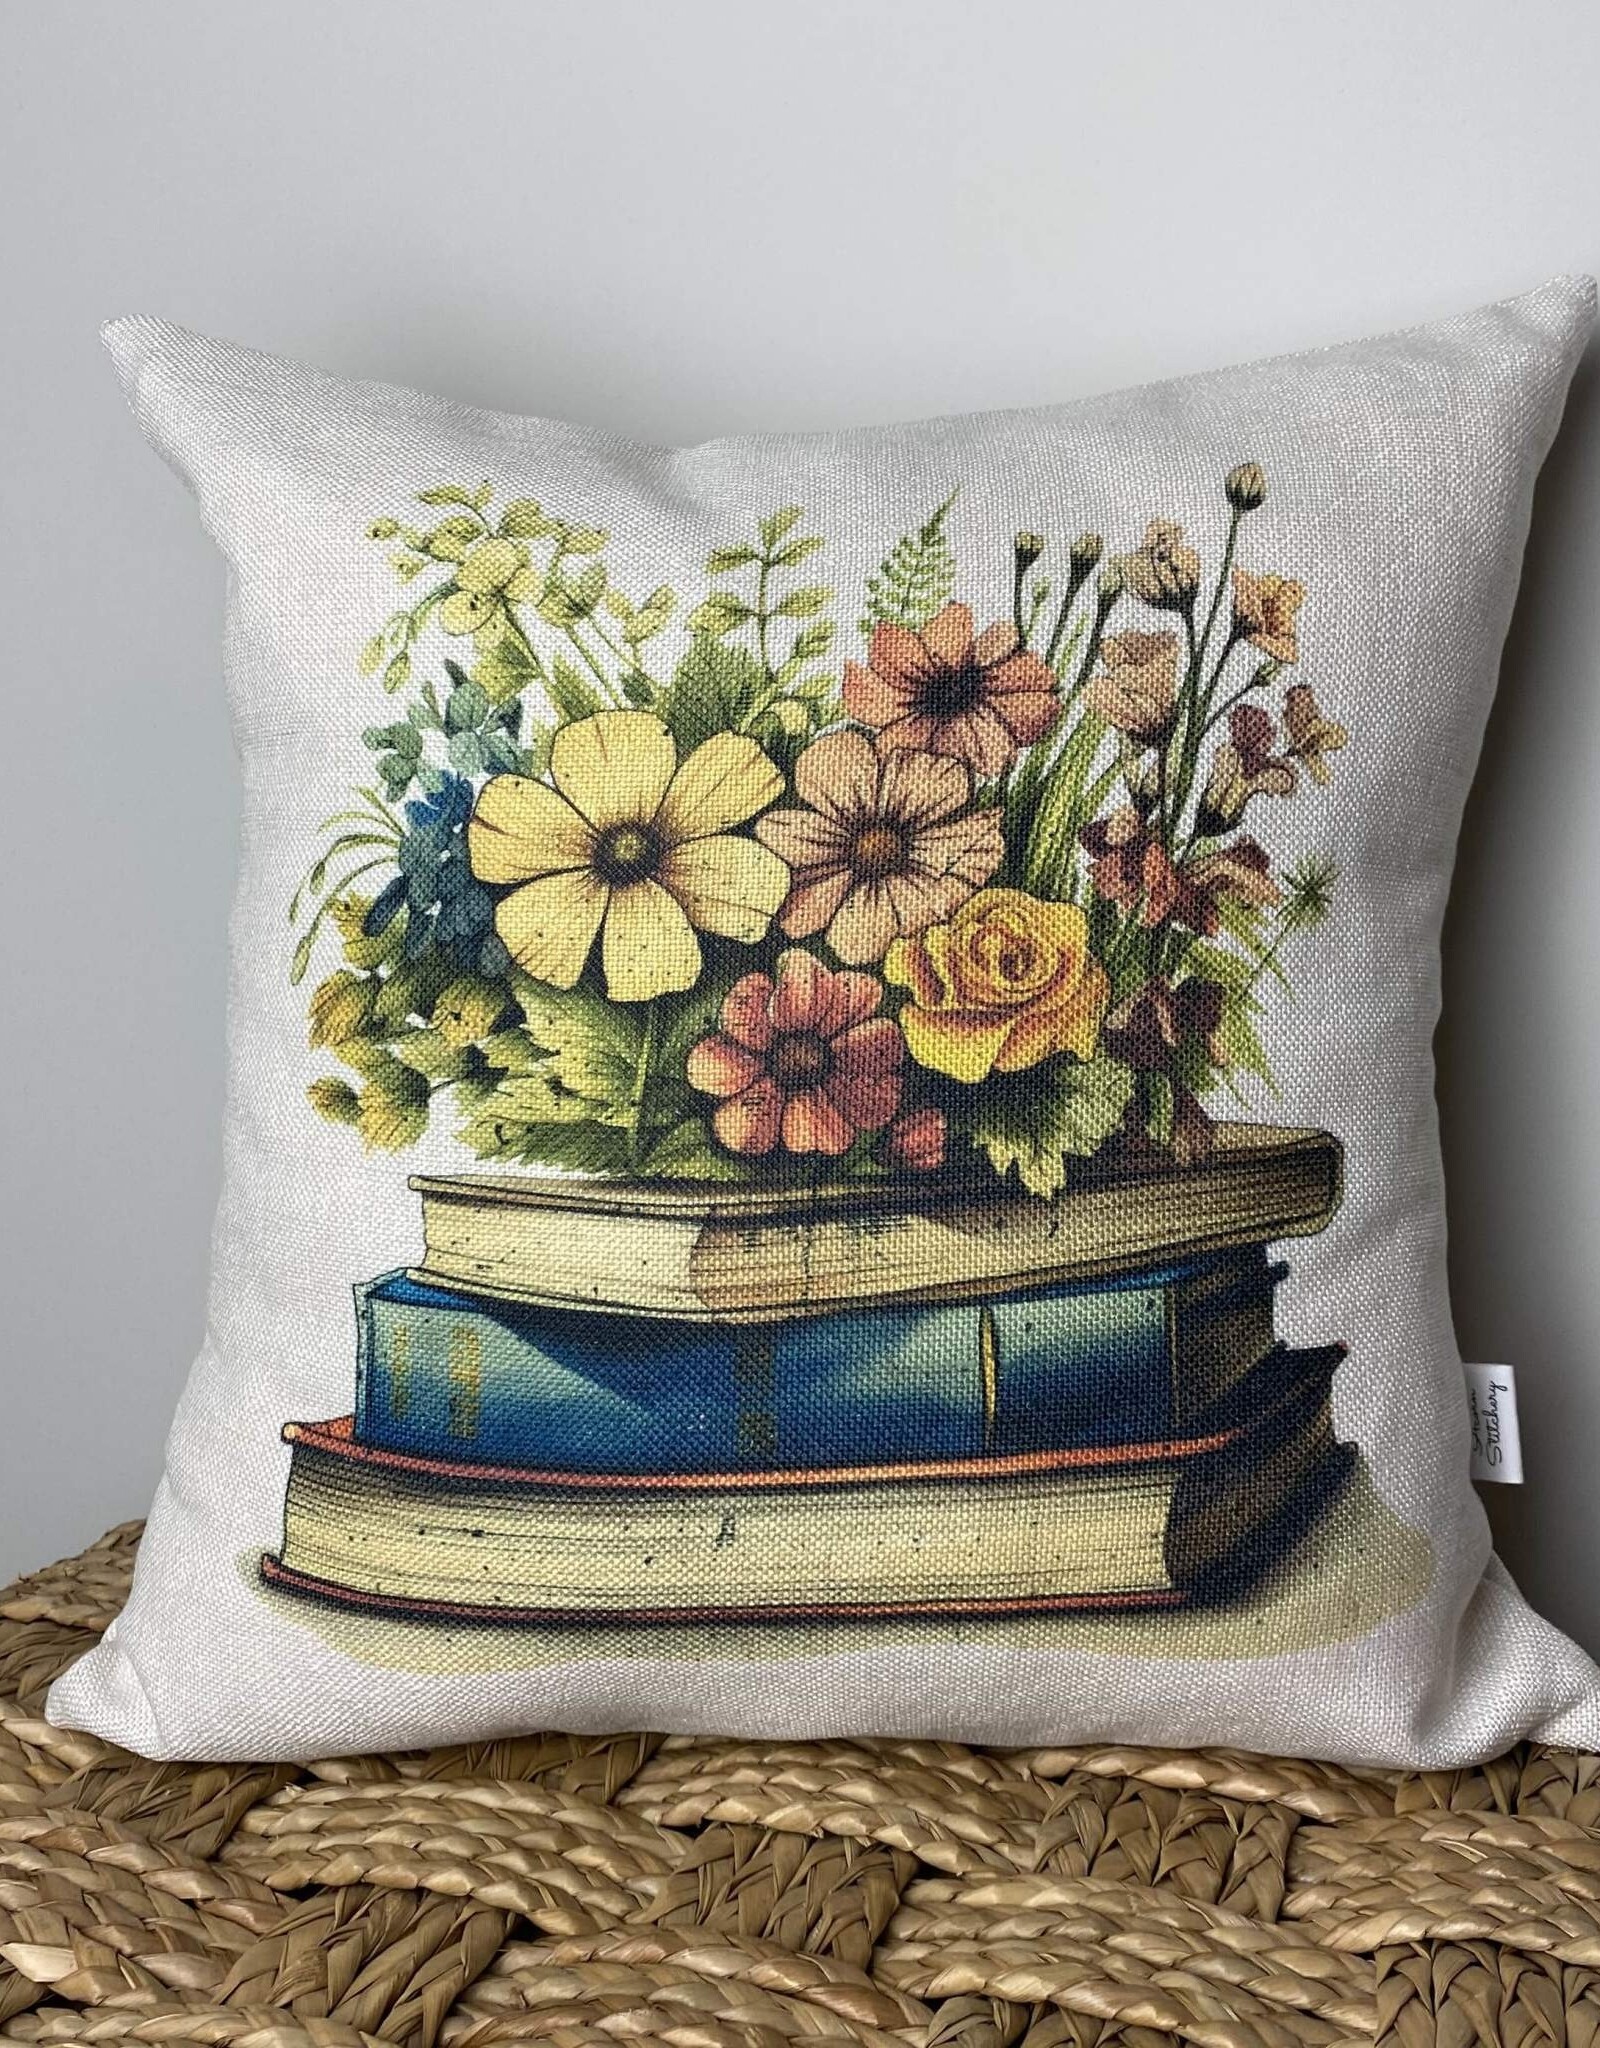 Vintage Books & Flowers Pillow - bright